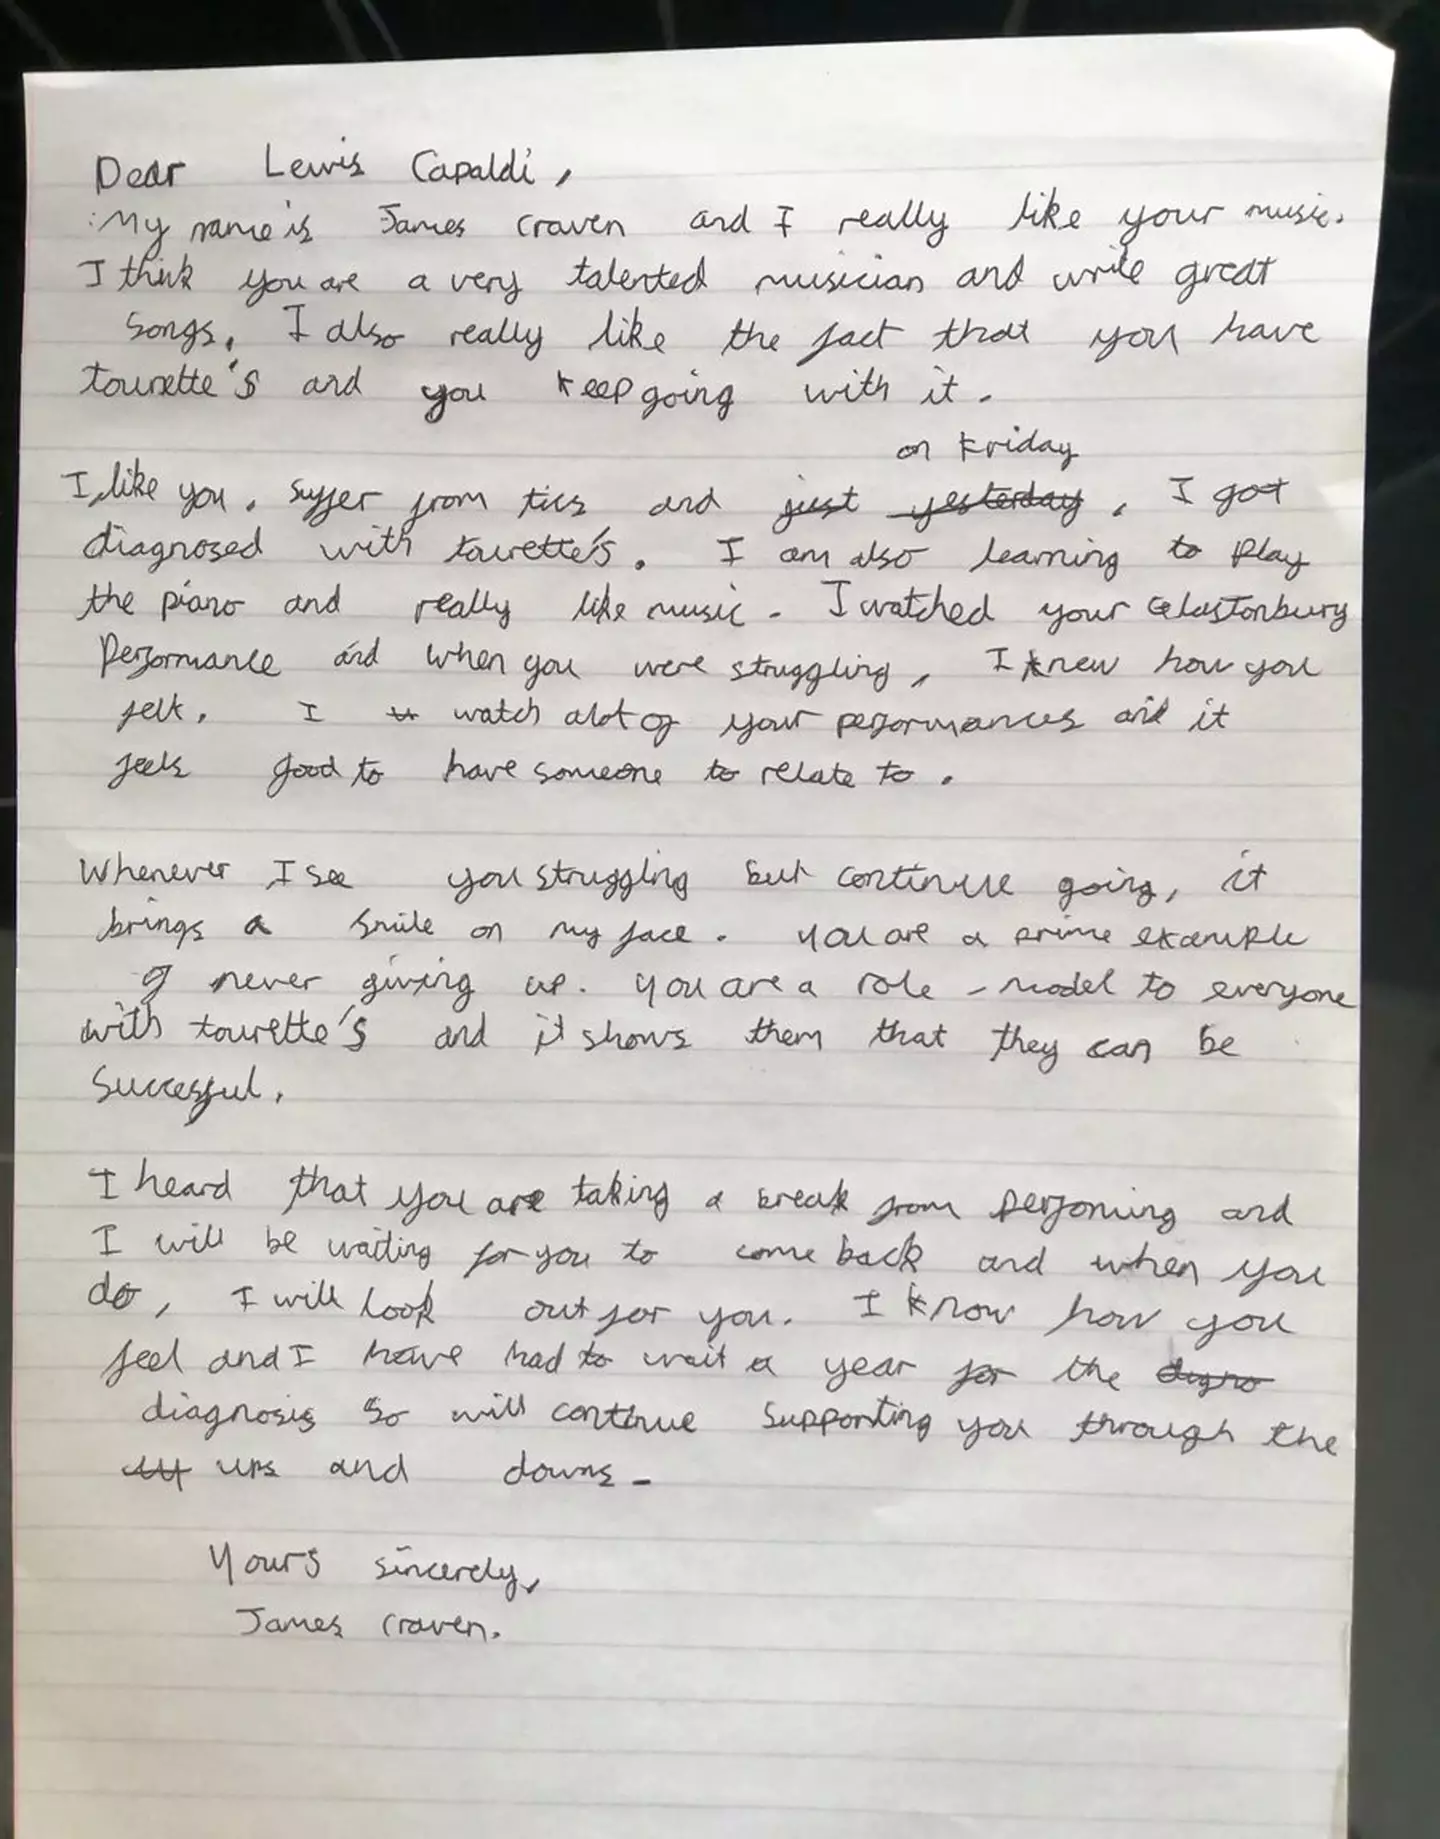 James' handwritten letter to Lewis Capaldi.